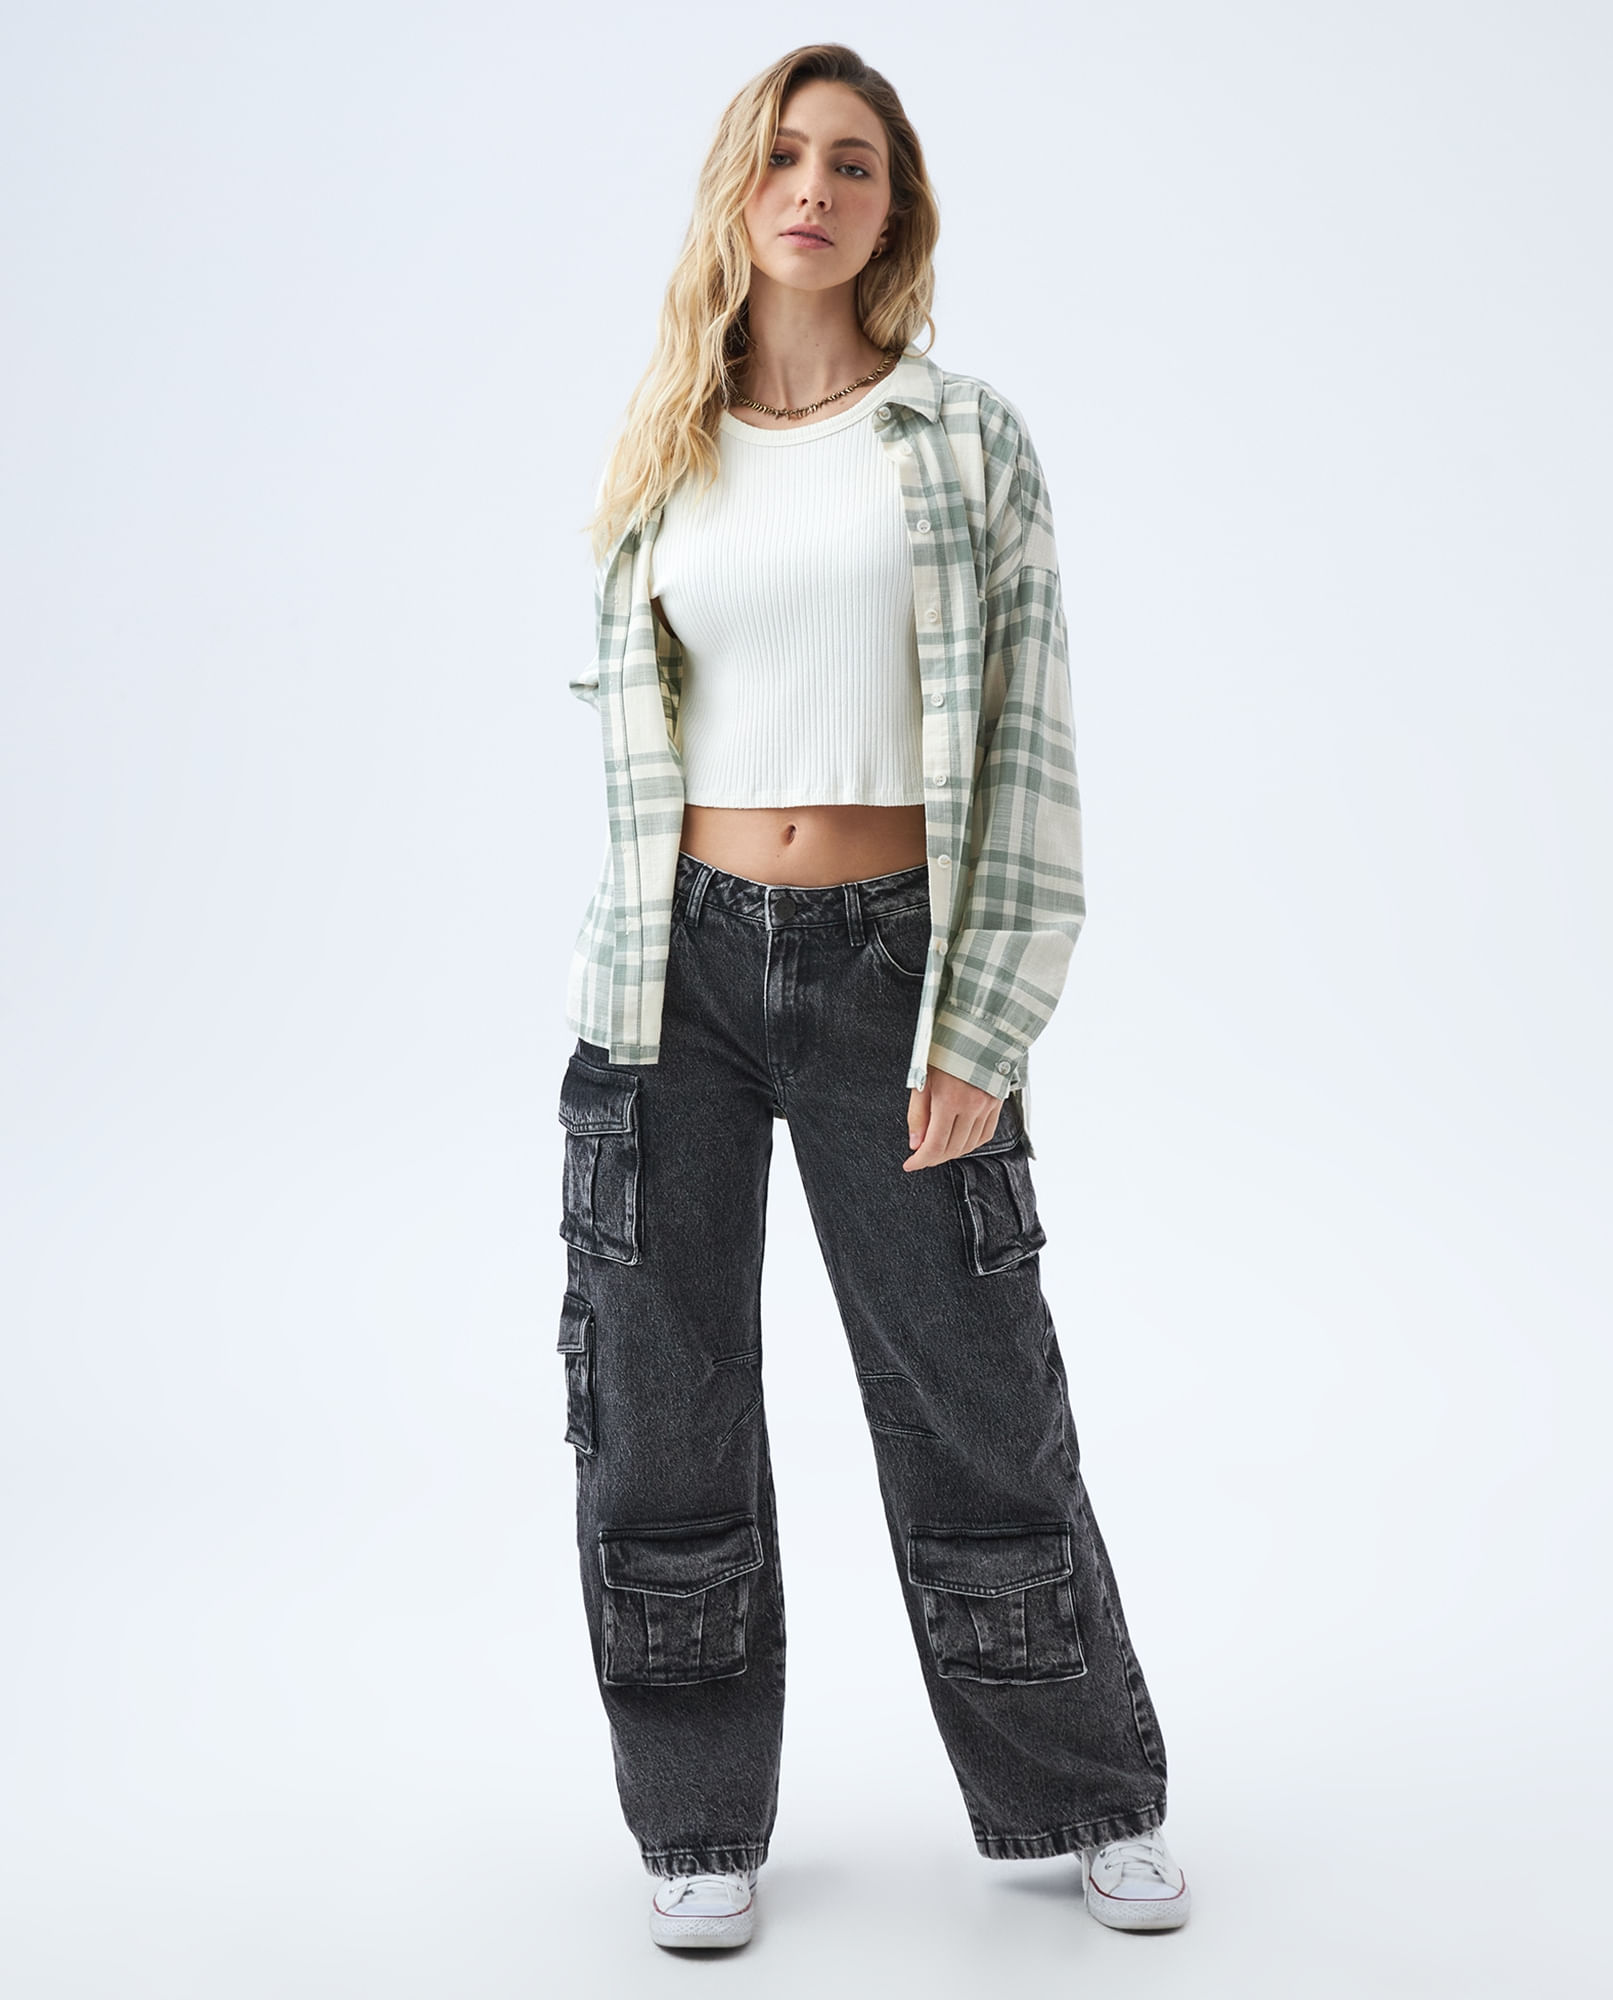 Americanino Jeans Cargo Tiro Medio Mujer